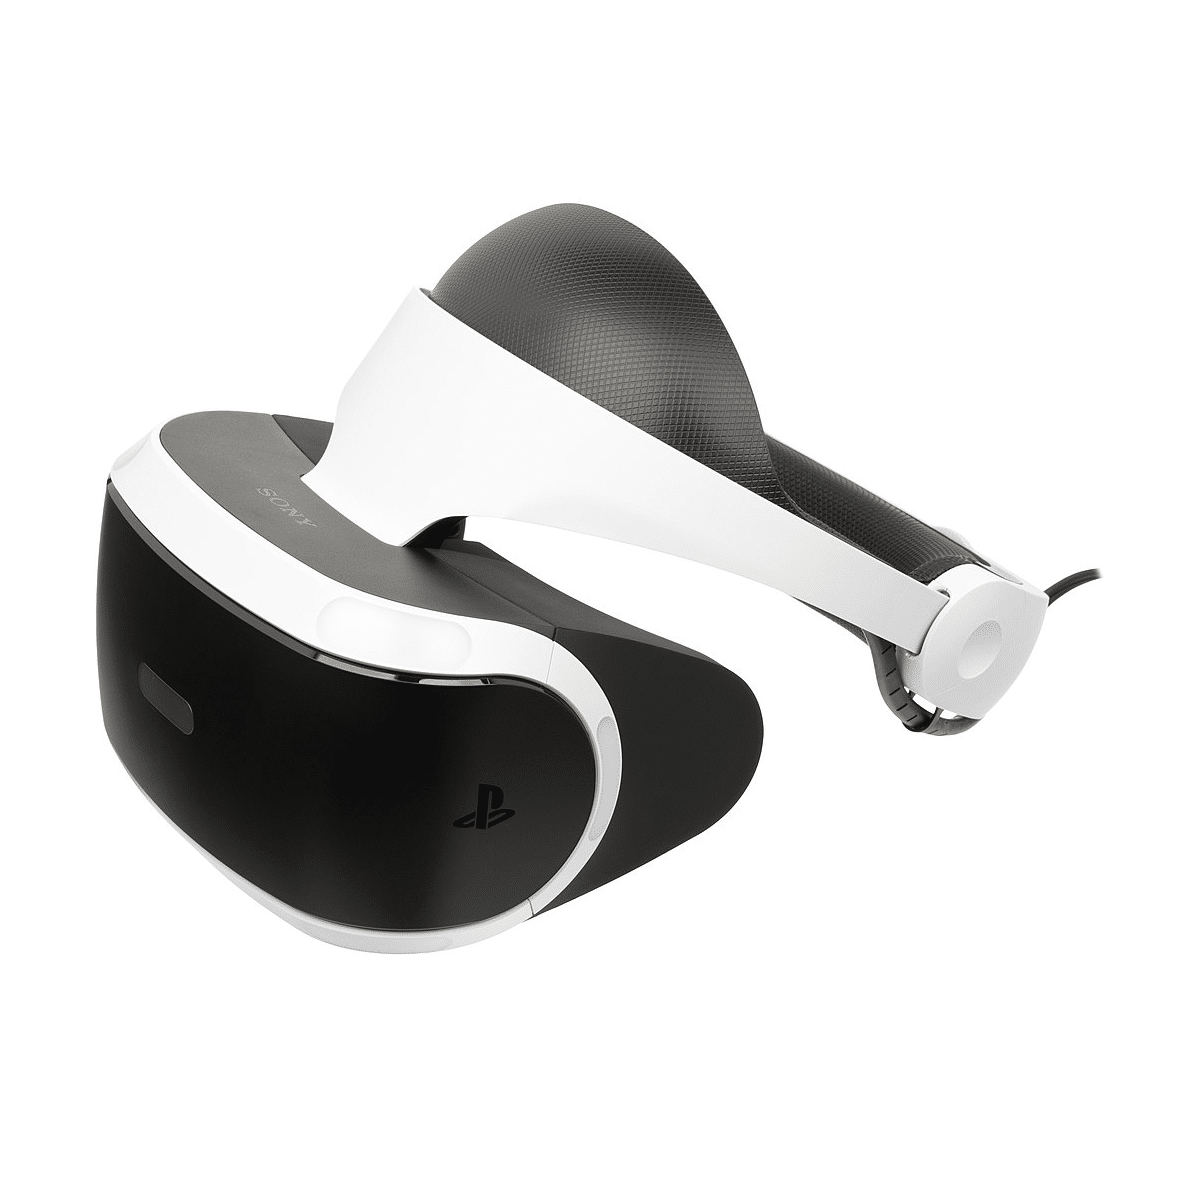 PlayStation VR sæt, incl kamera (CUH-ZVR2) - Spilbutik